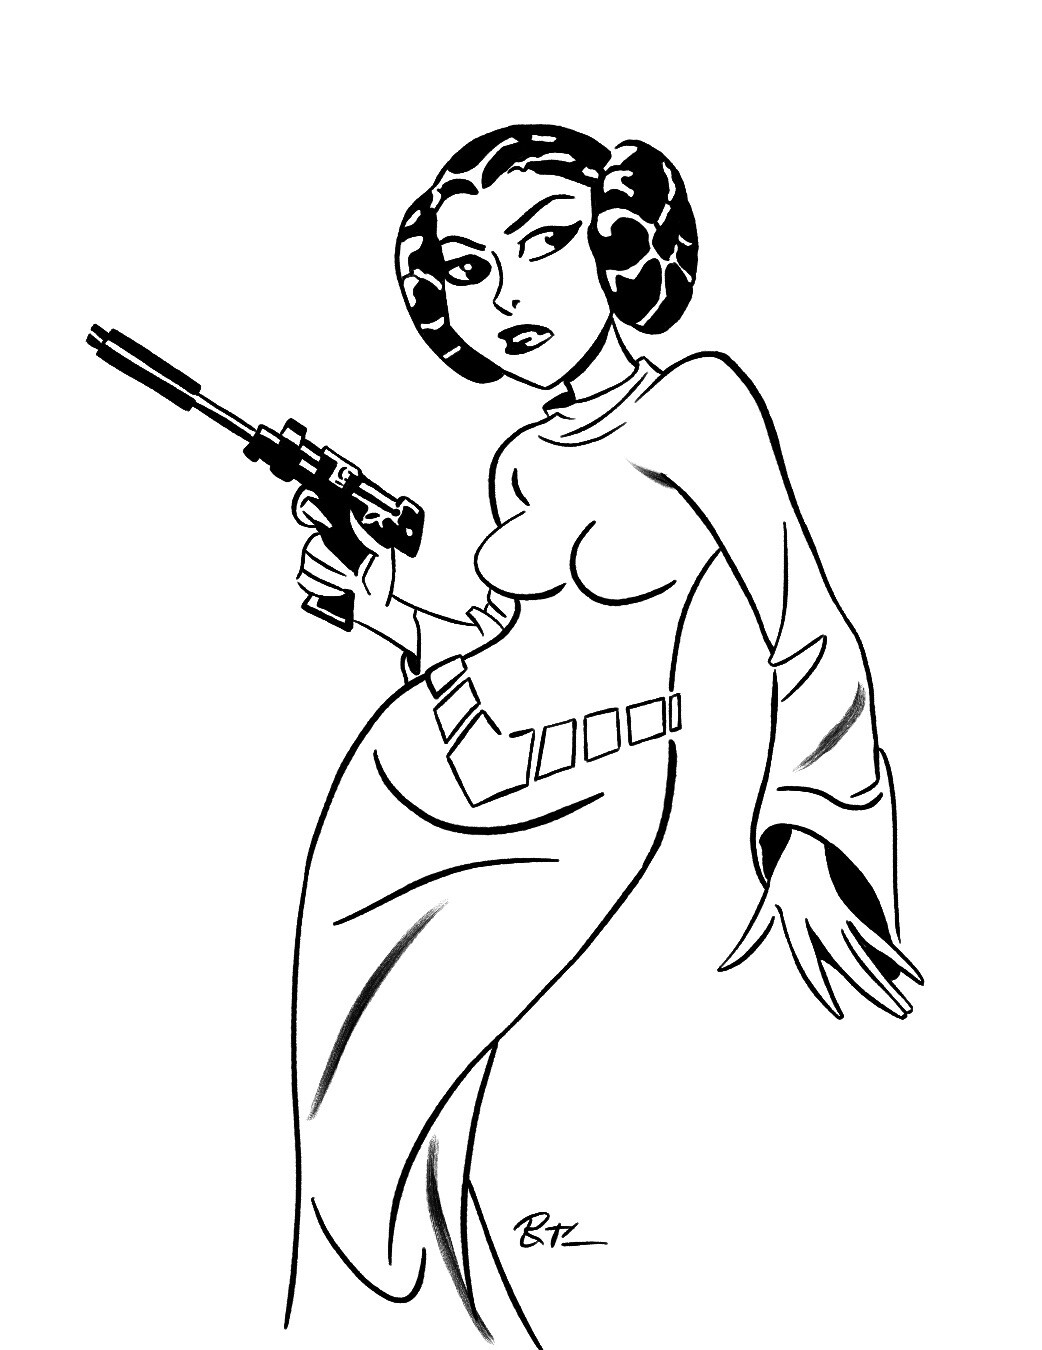 Bruce Timm Princess Leia Inking Study.